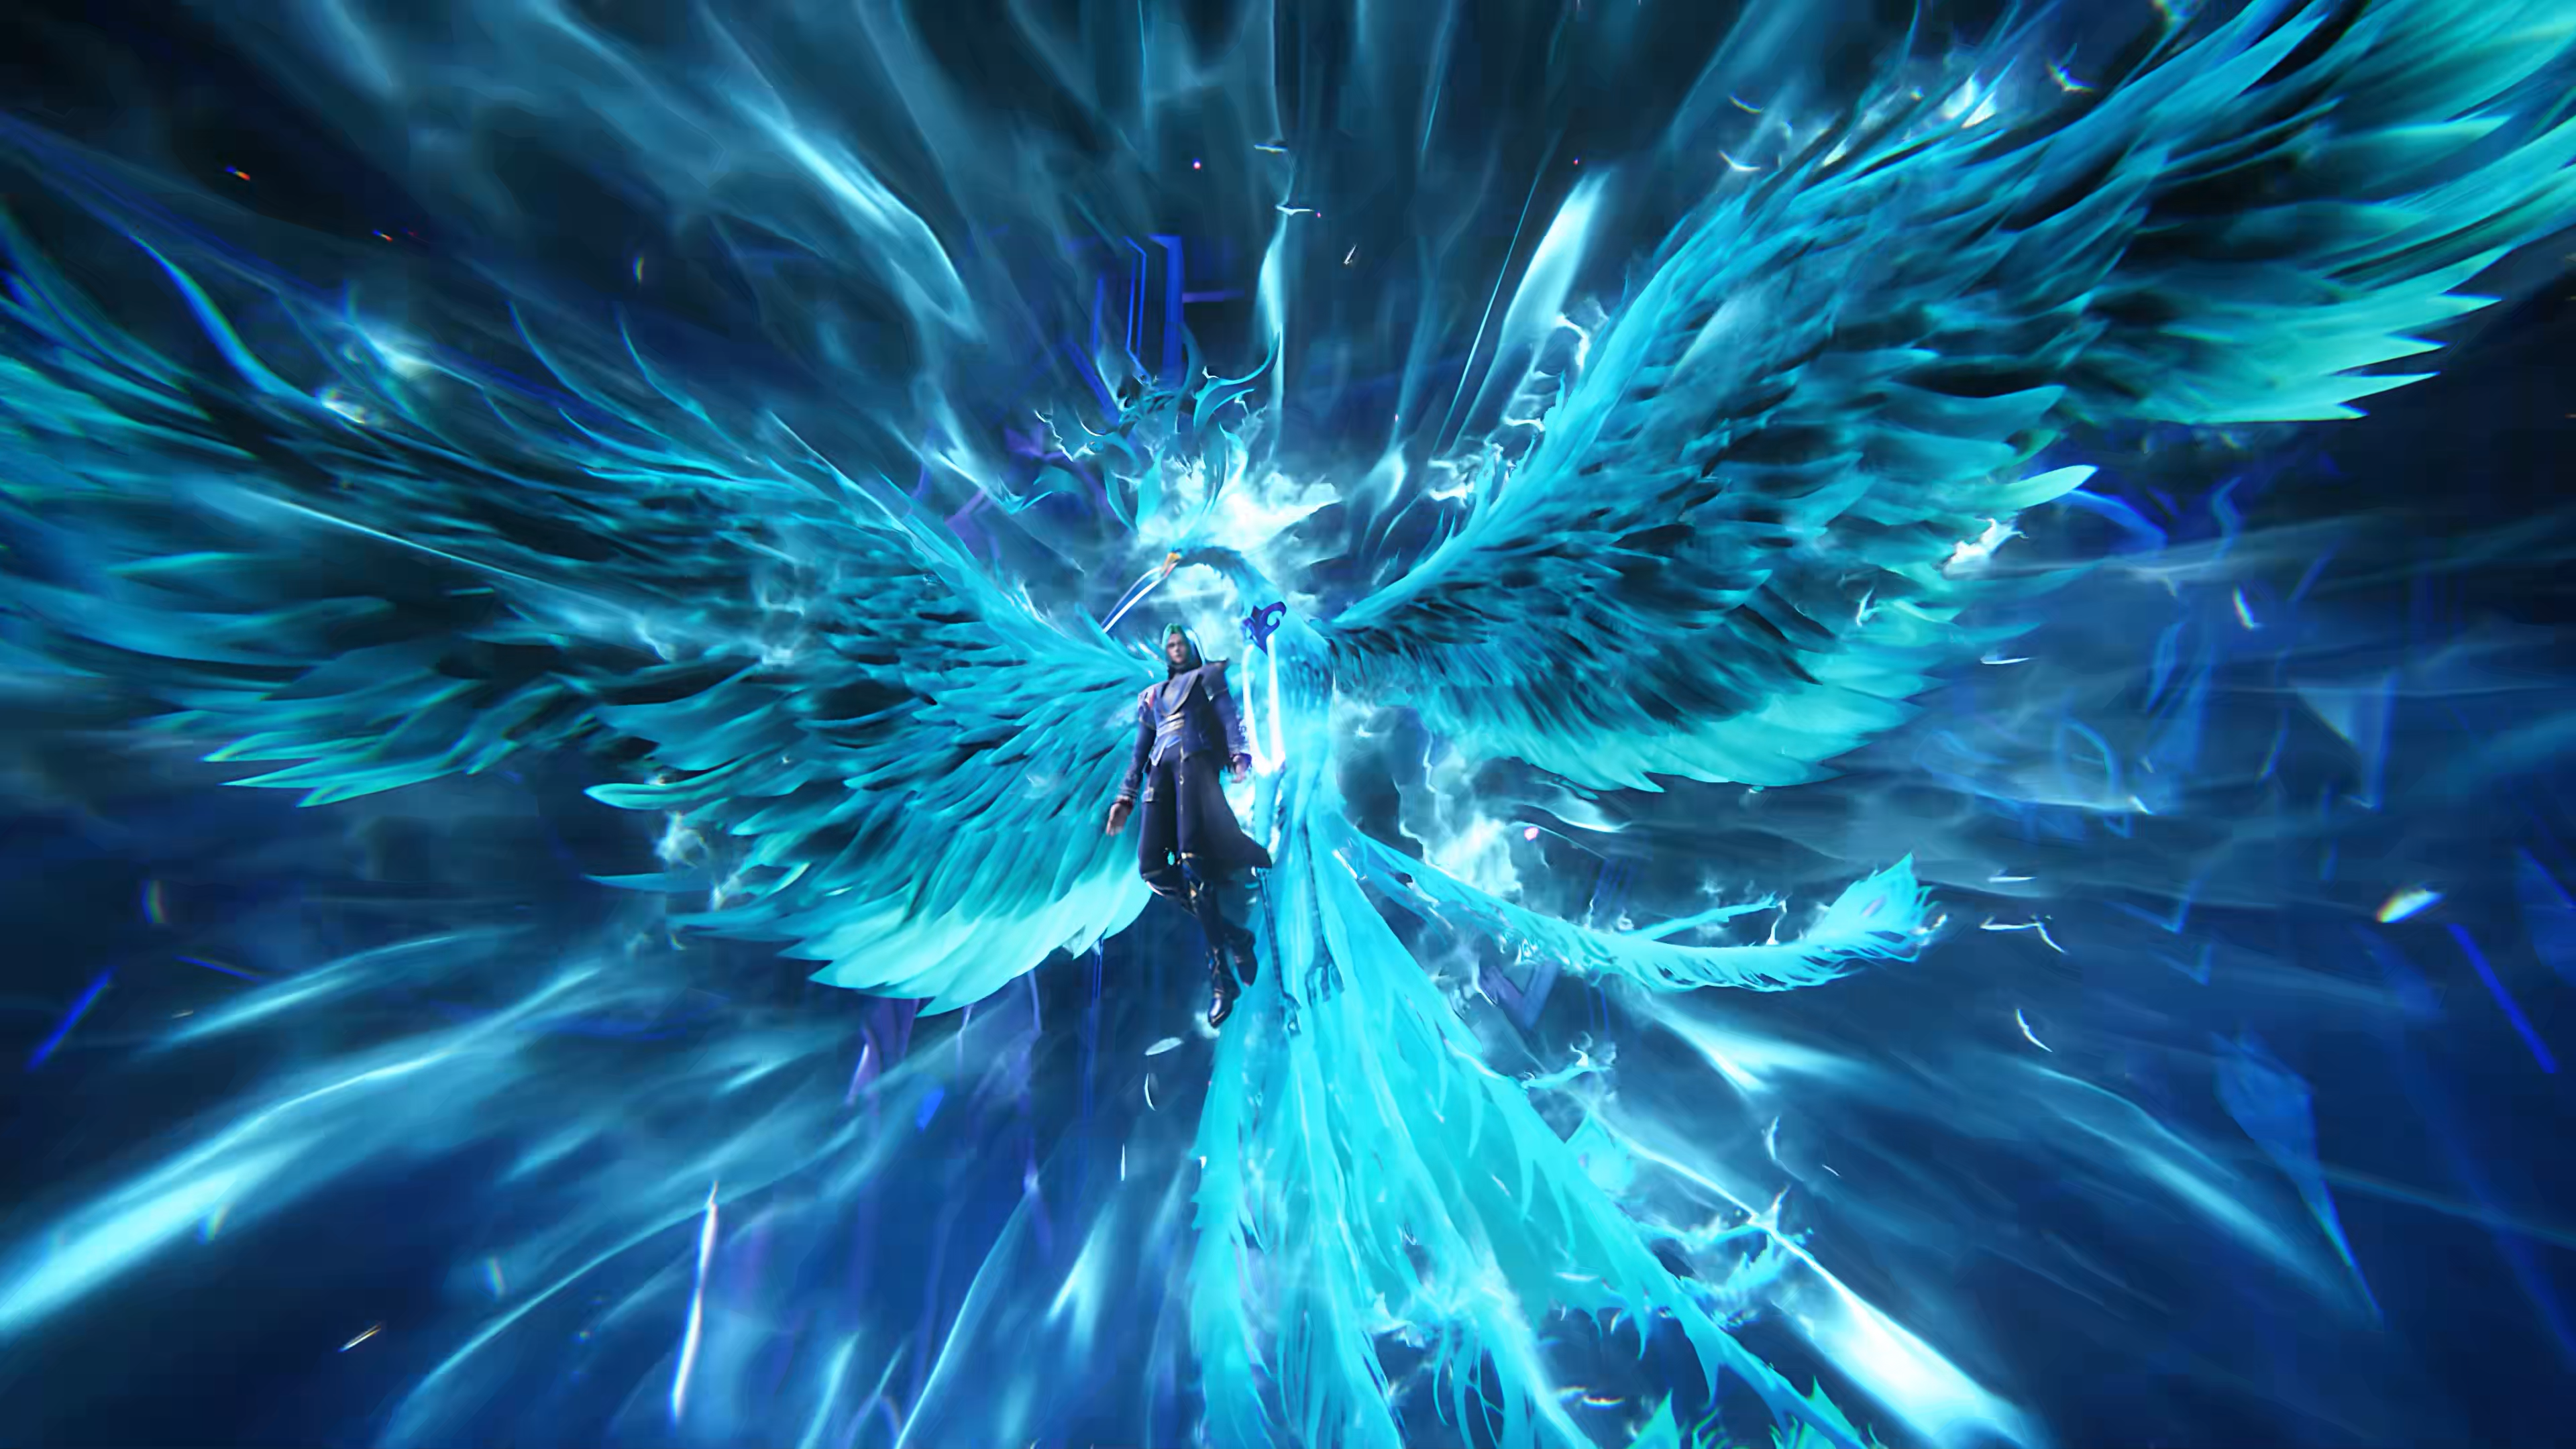 General 3840x2160 Shen Yin Wang Zuo blue suit and tie blue hair looking at viewer birds phoenix blue clothing fantasy men fantasy art beak wings CGI floating animals